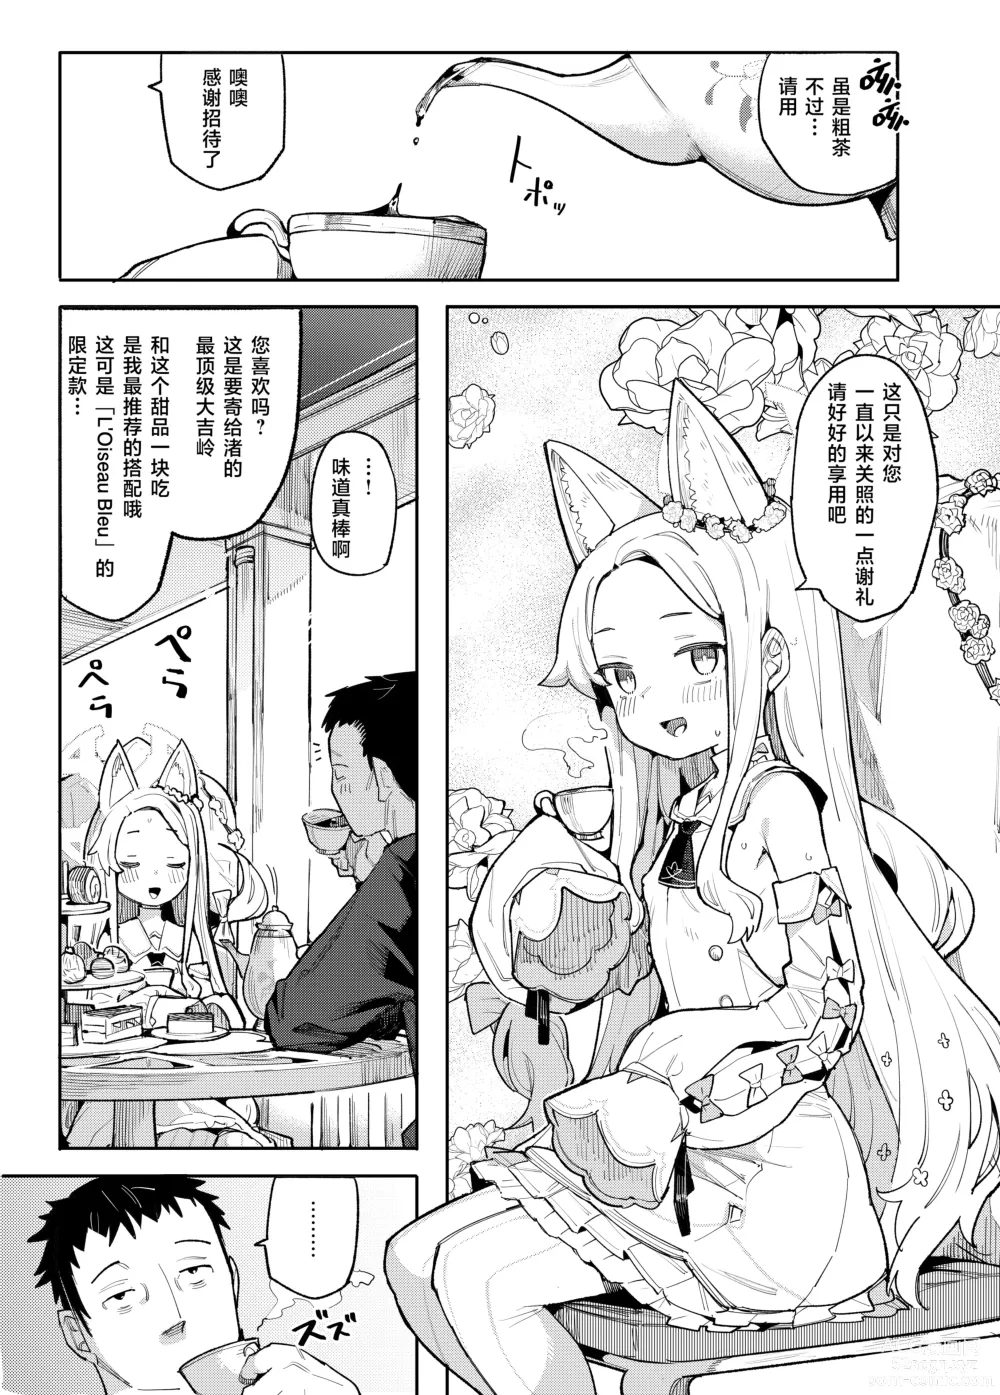 Page 2 of doujinshi 雌性狐狸看到了充满色情的未来